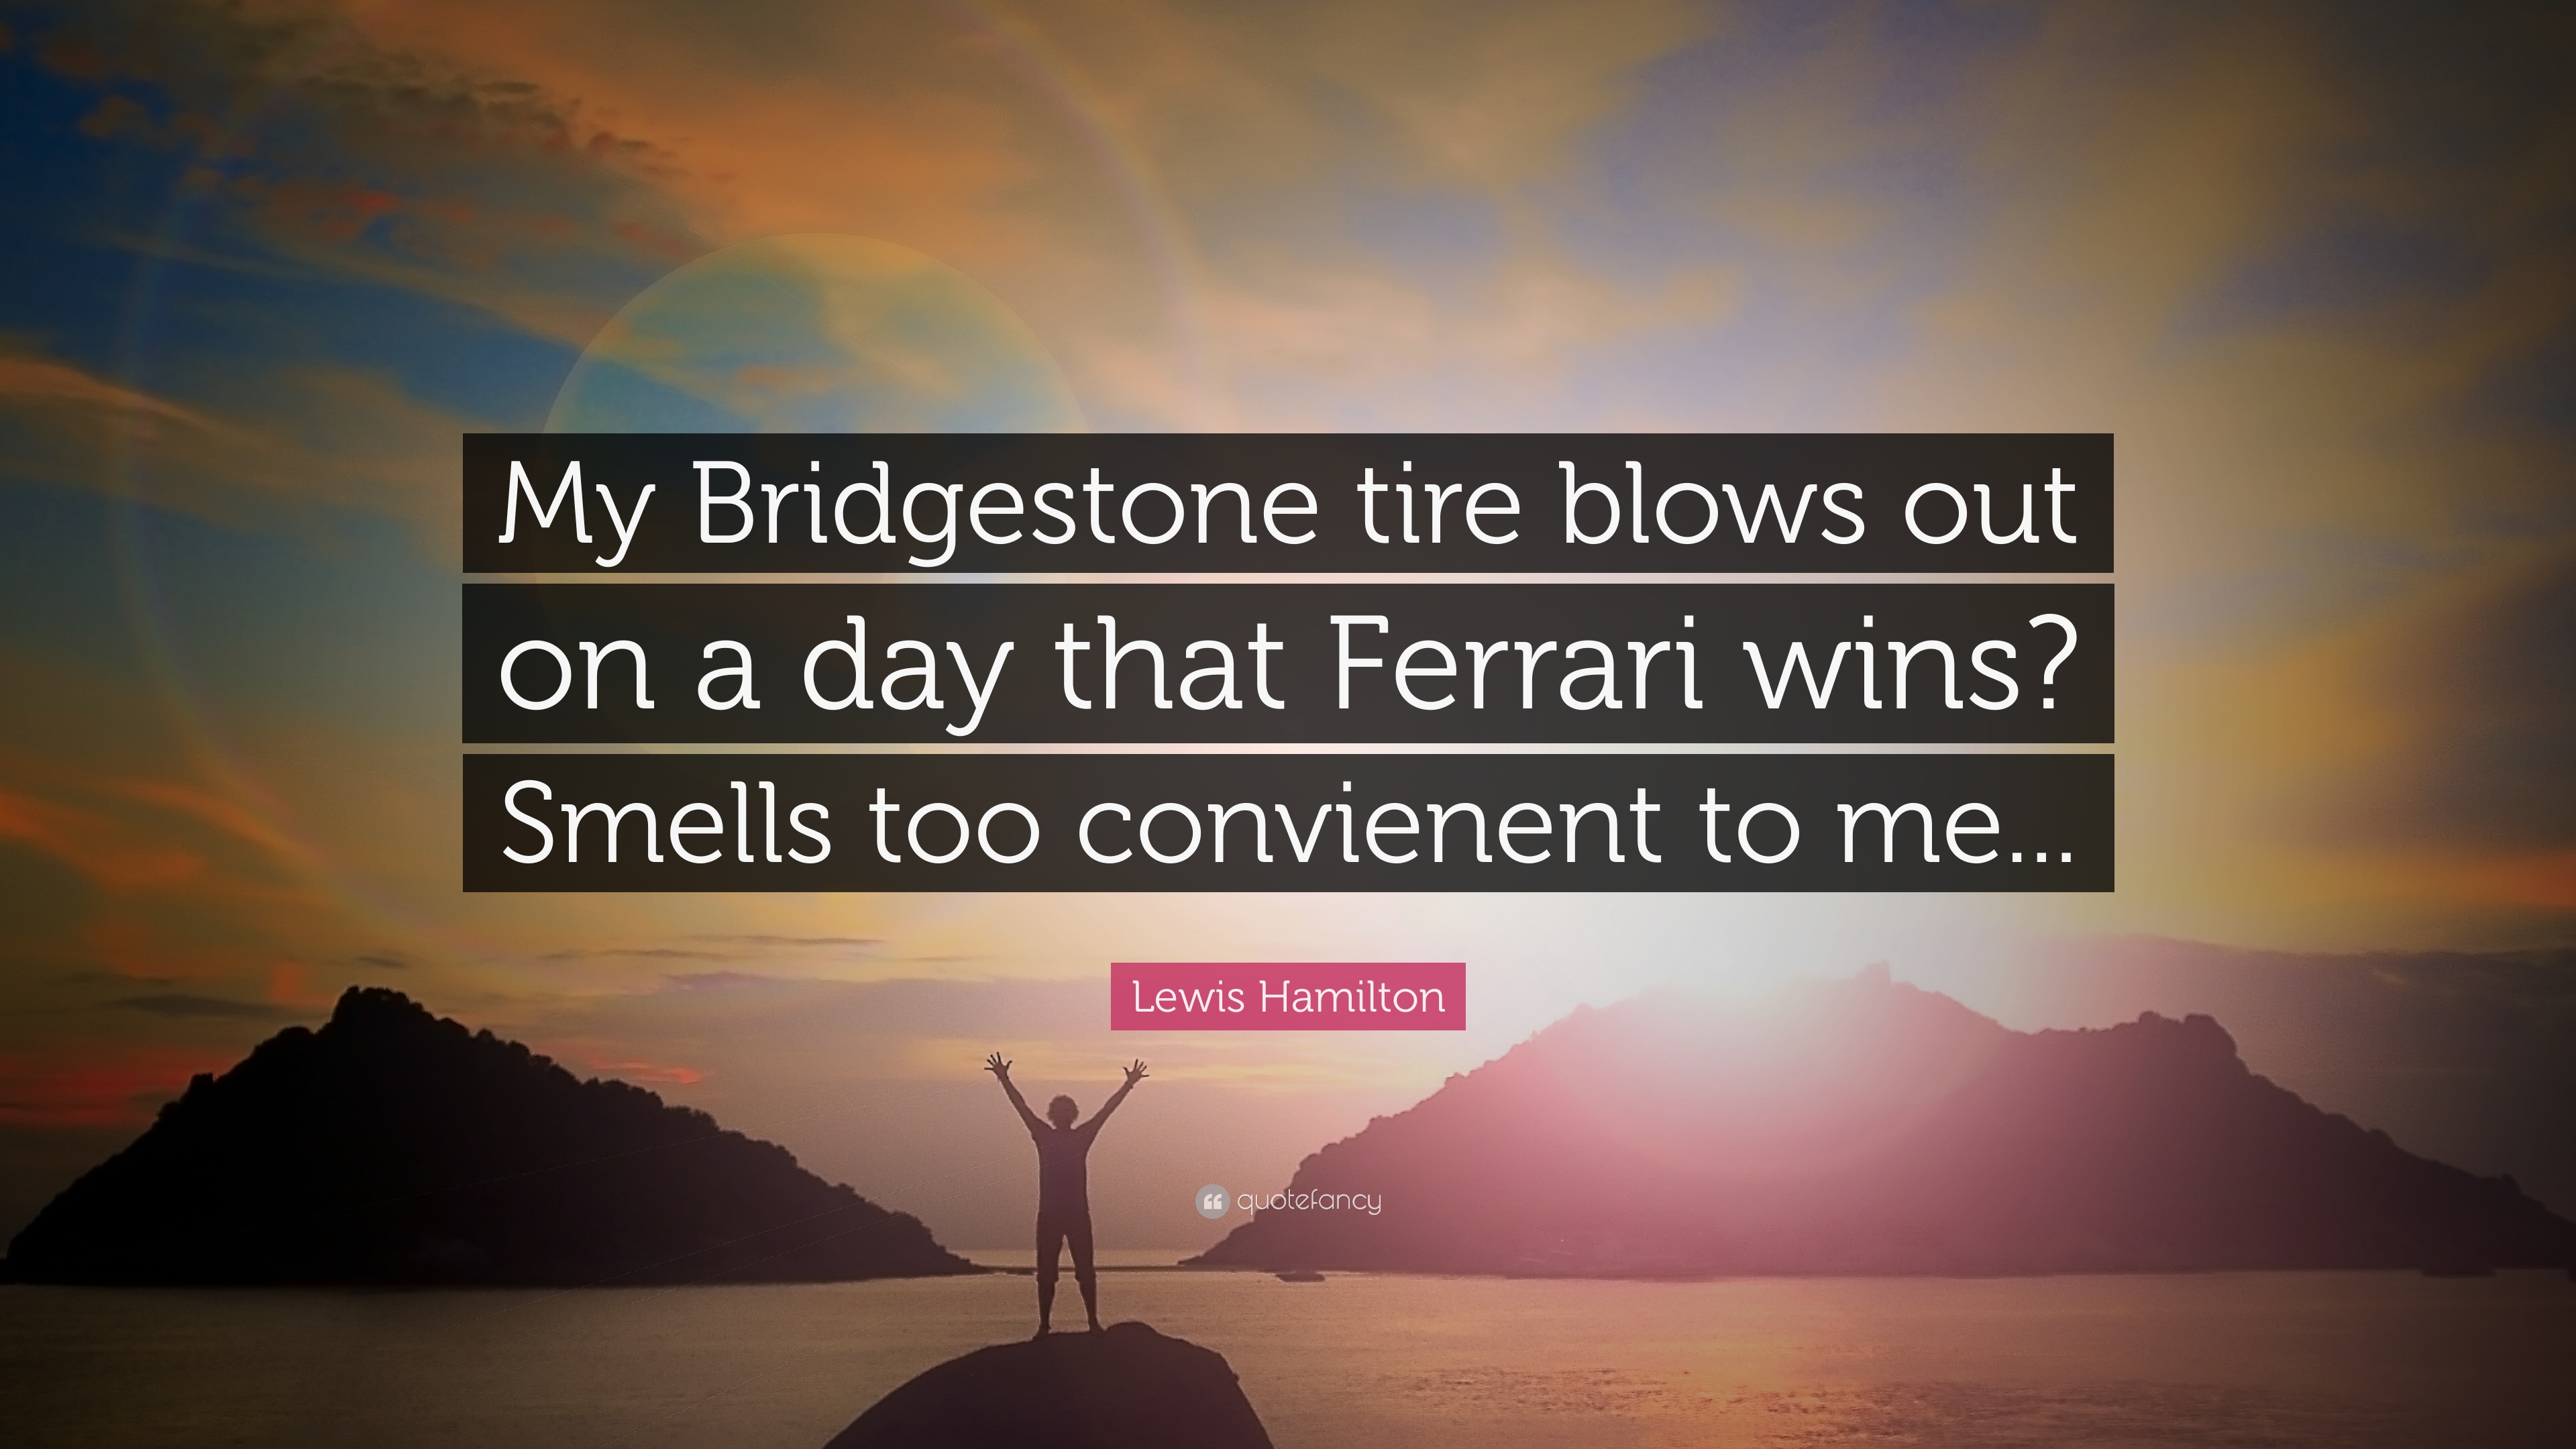 Lewis Hamilton Quote: “My Bridgestone tire blows out on a